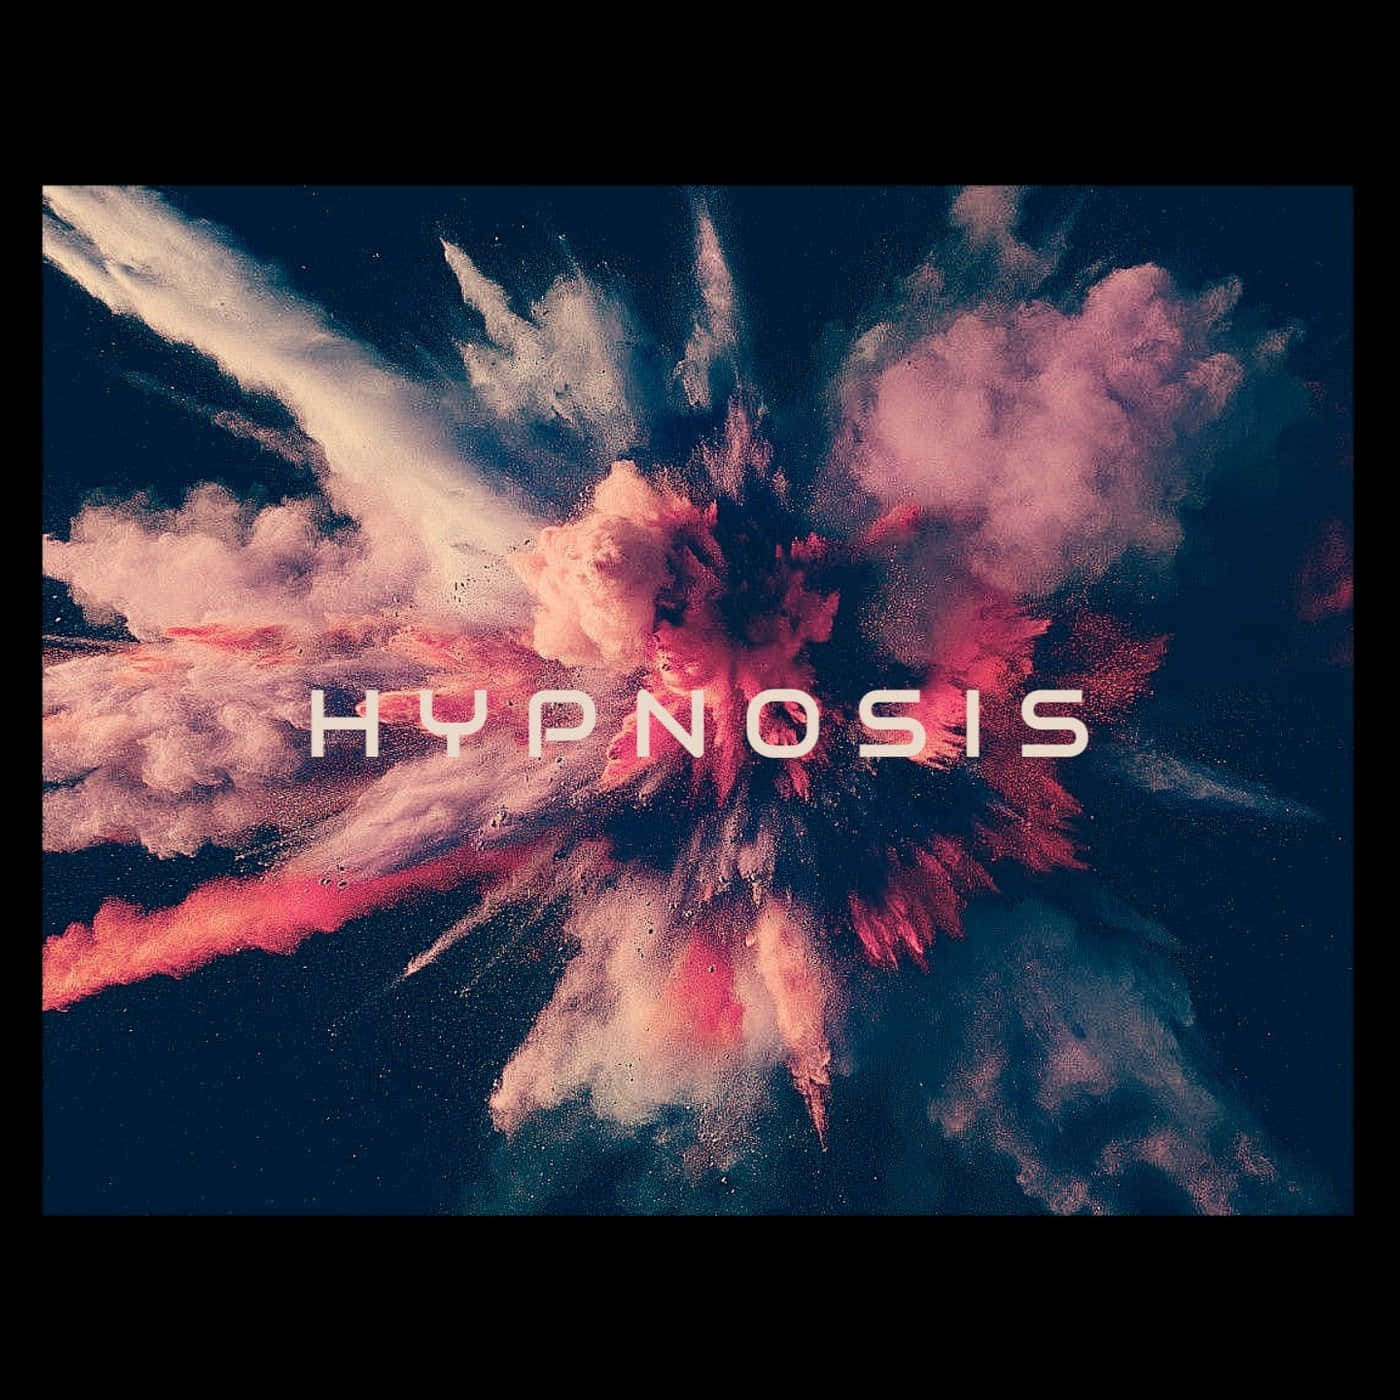 Hypnosis - Cd Cover Wallpaper